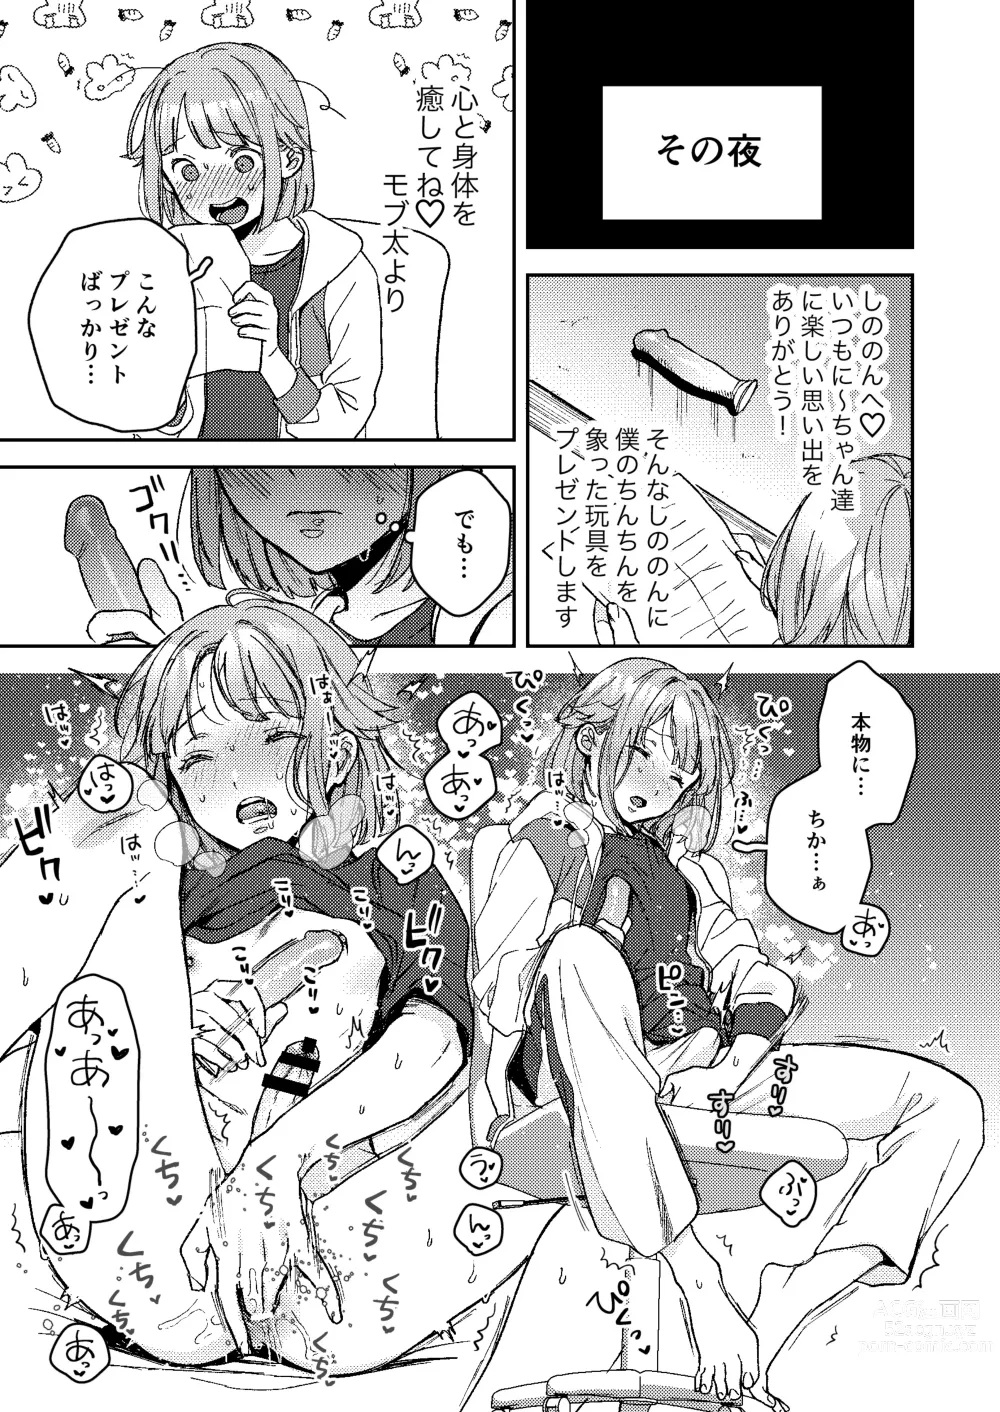 Page 6 of doujinshi Enema Ana 2